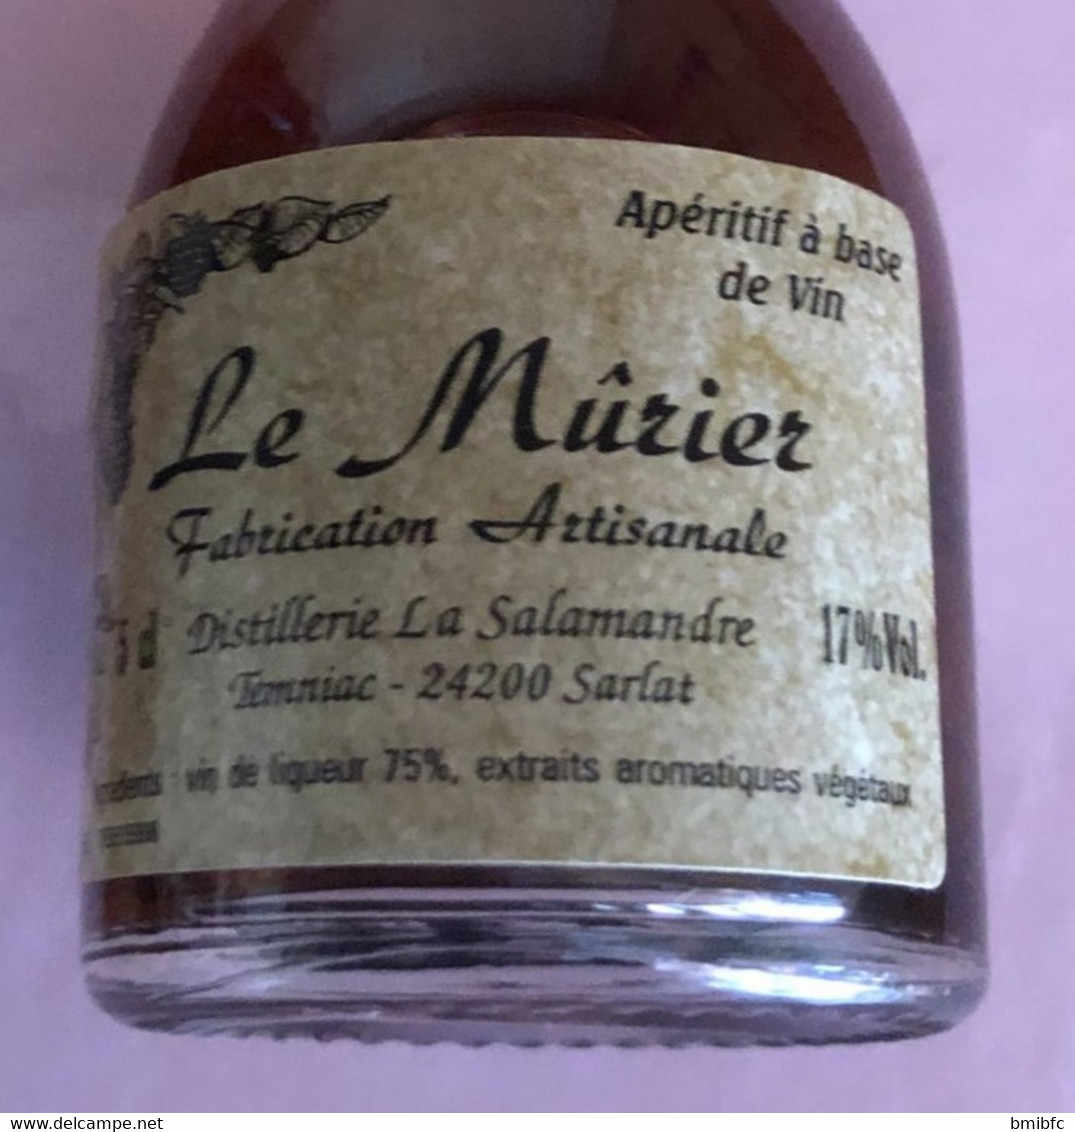 Le  Mûrier Fabrication Artisanale Distillerie La Salamandre  -  Temniac  - 24200 SARLAT - 5cl - 17% Vol - Miniaturflaschen